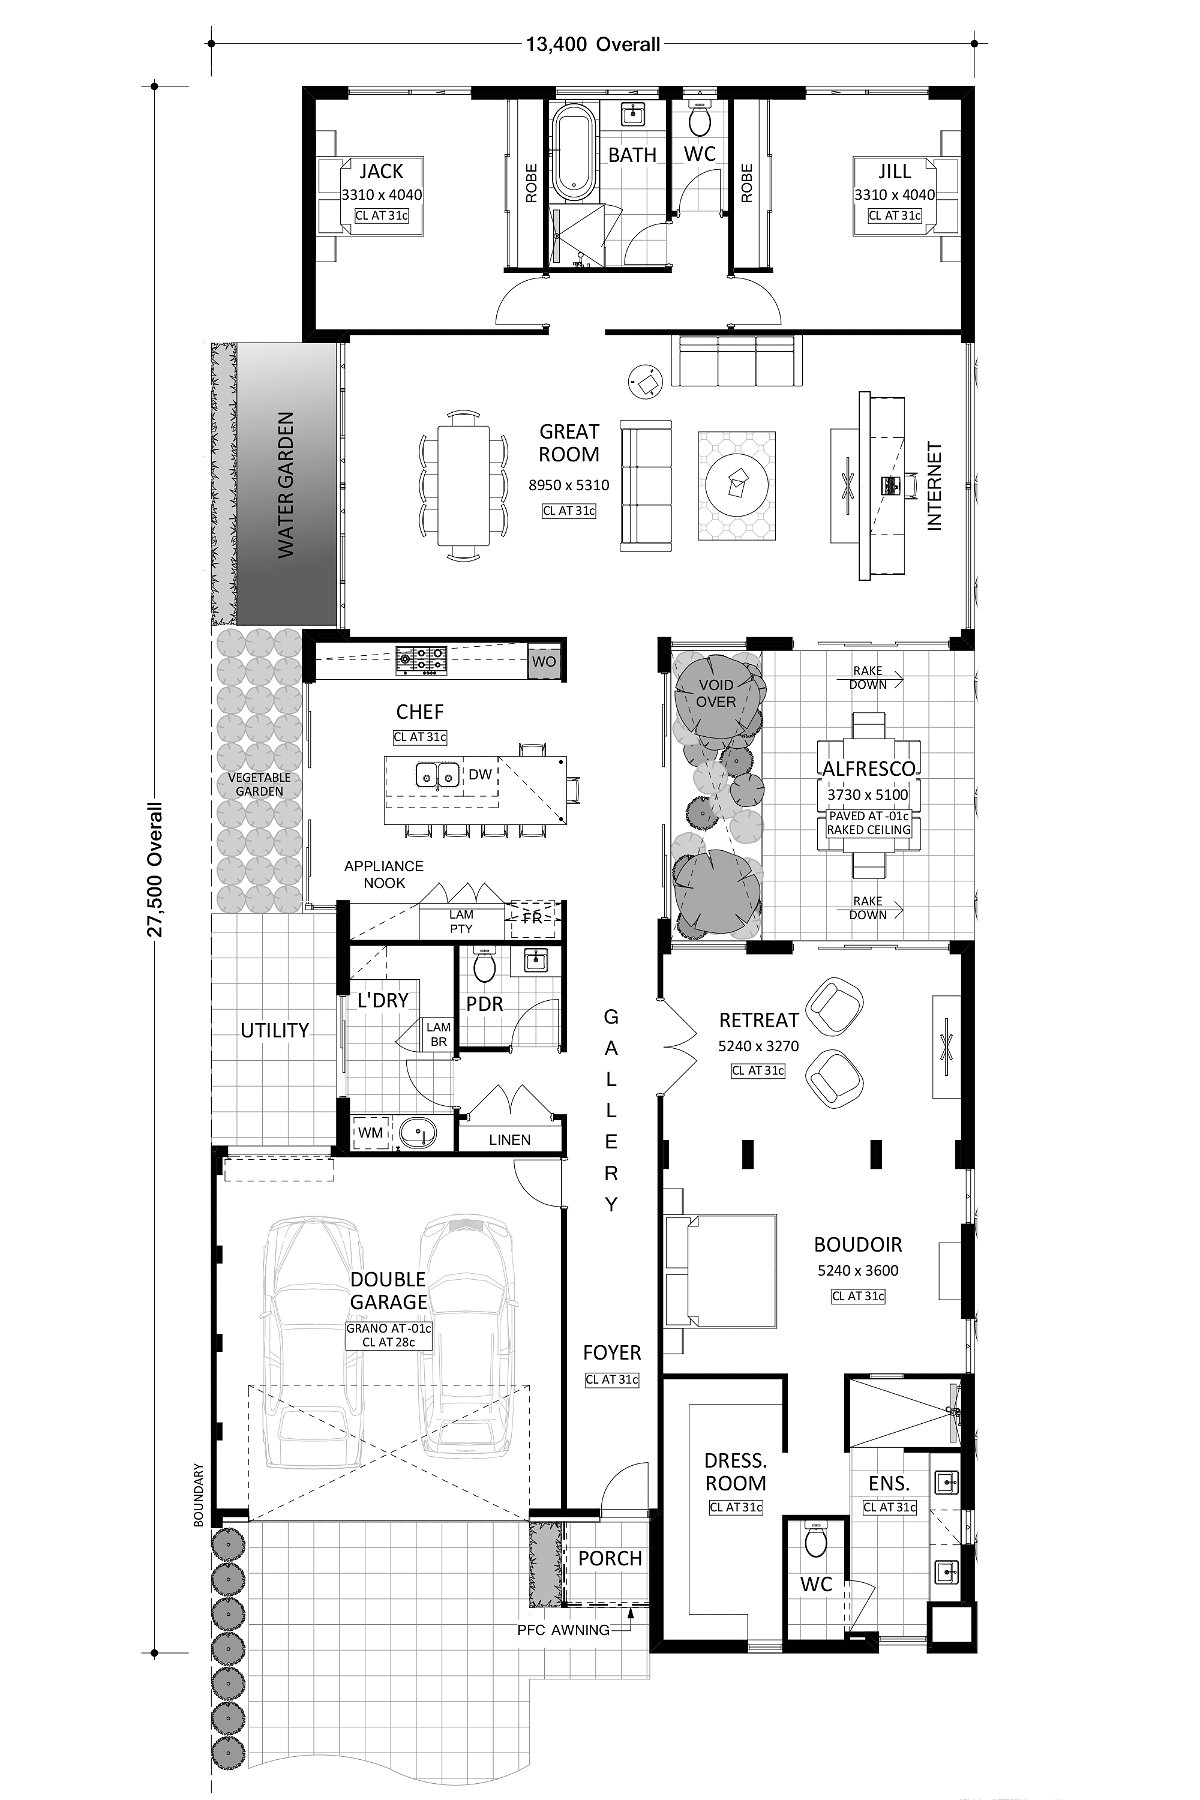 Residential Attitudes - Moderno - Floorplan - Moderno Floorplan Website